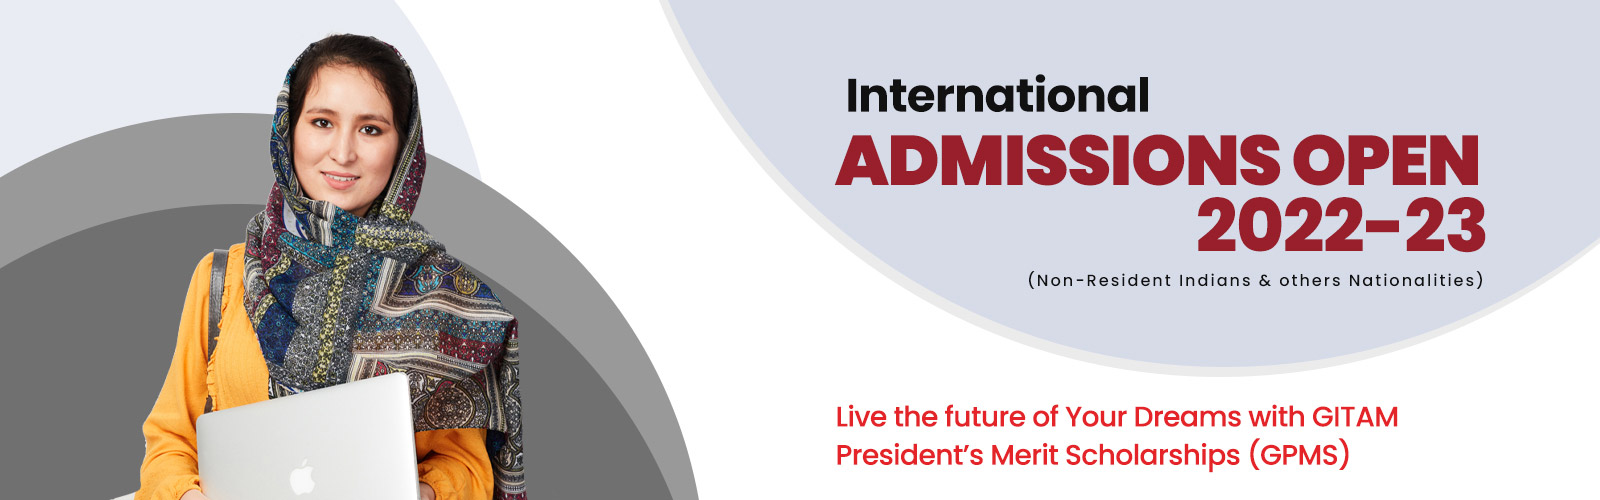 international-admissions